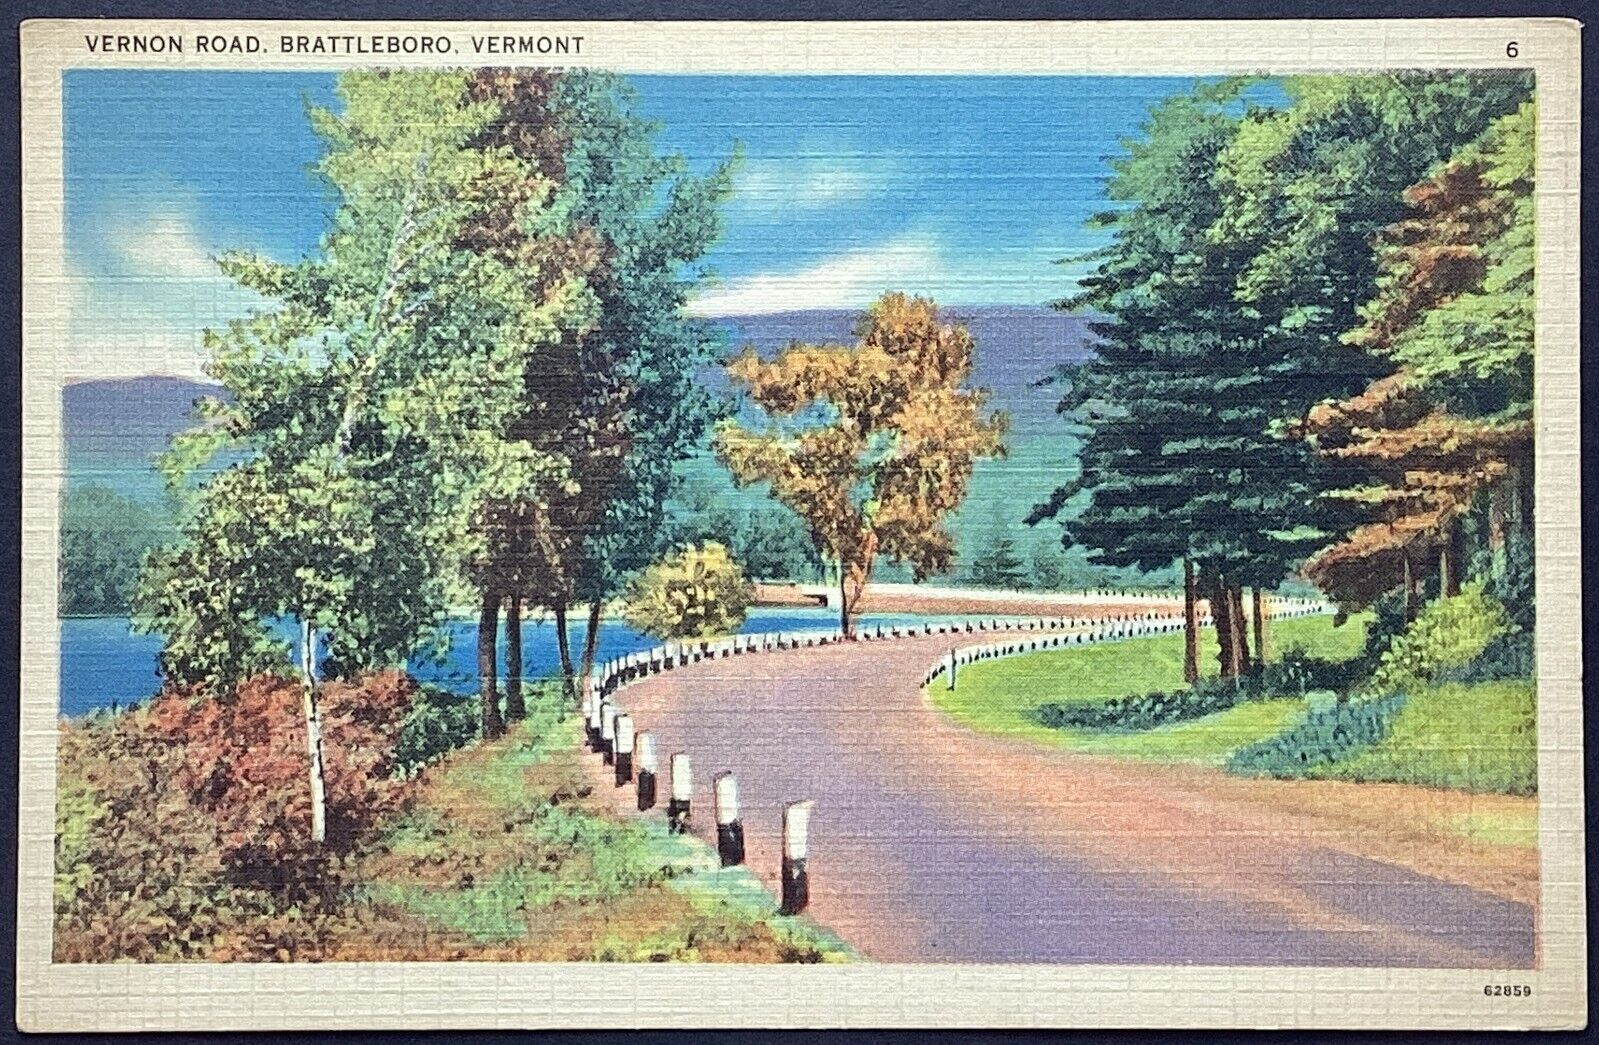 Brattleboro Vermont Vernon Road Vintage Linen Postcard Posted